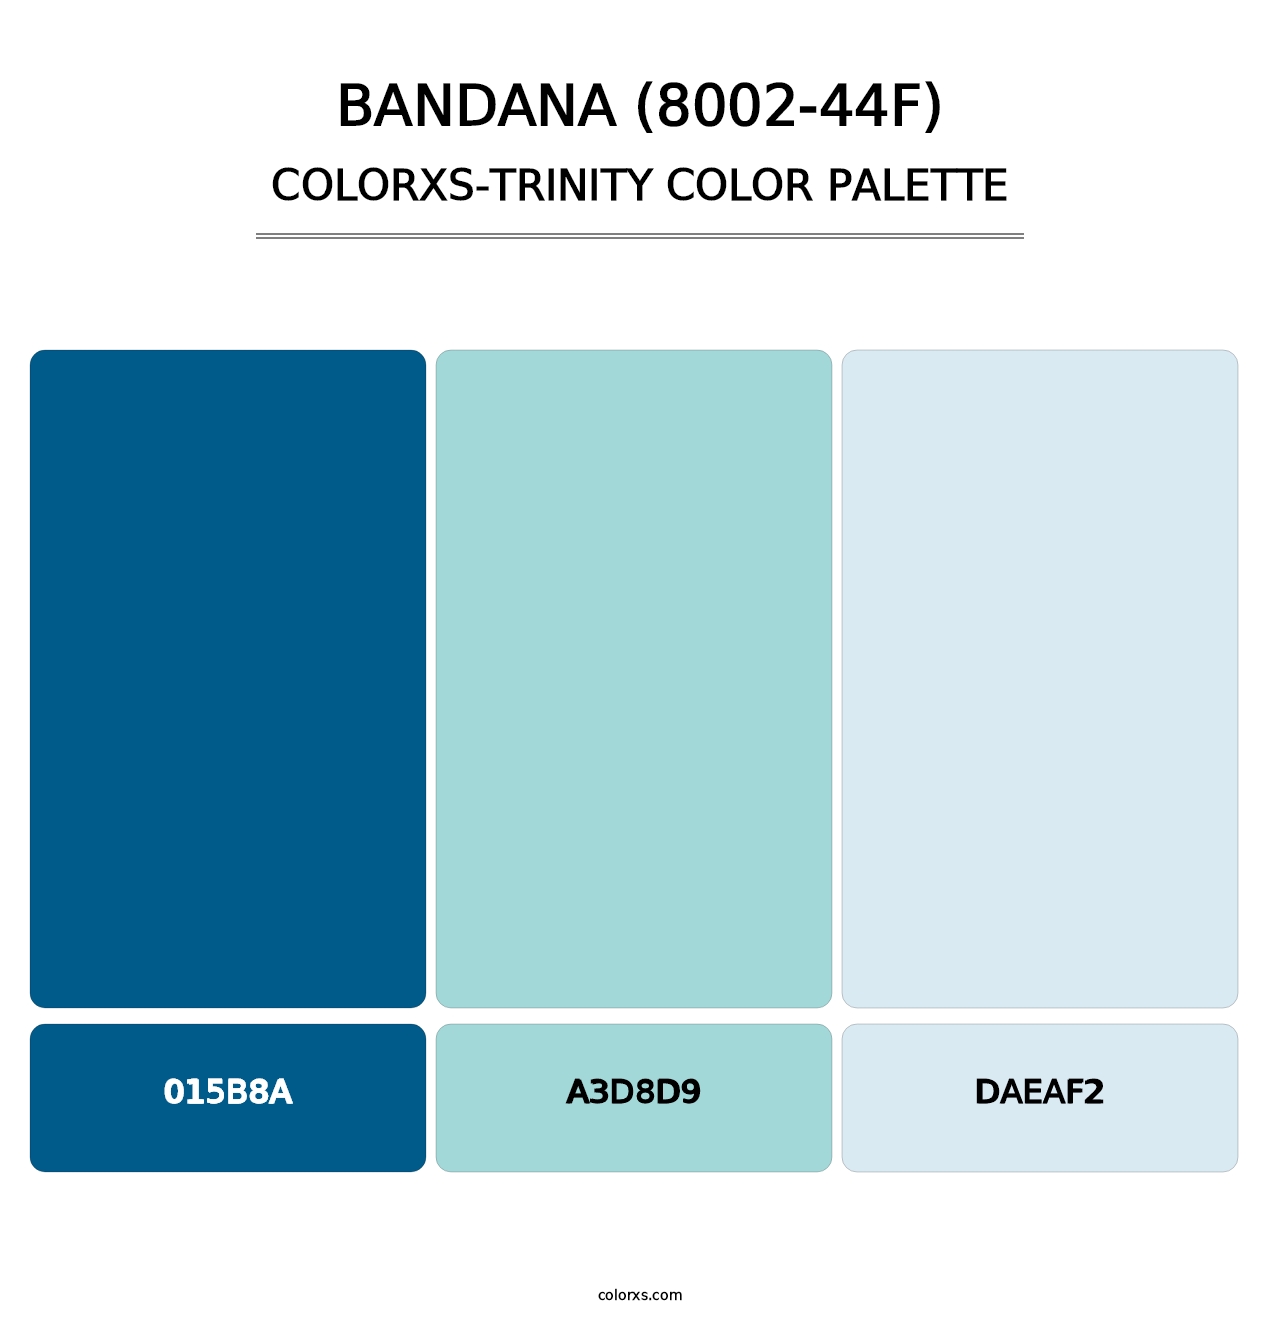 Bandana (8002-44F) - Colorxs Trinity Palette